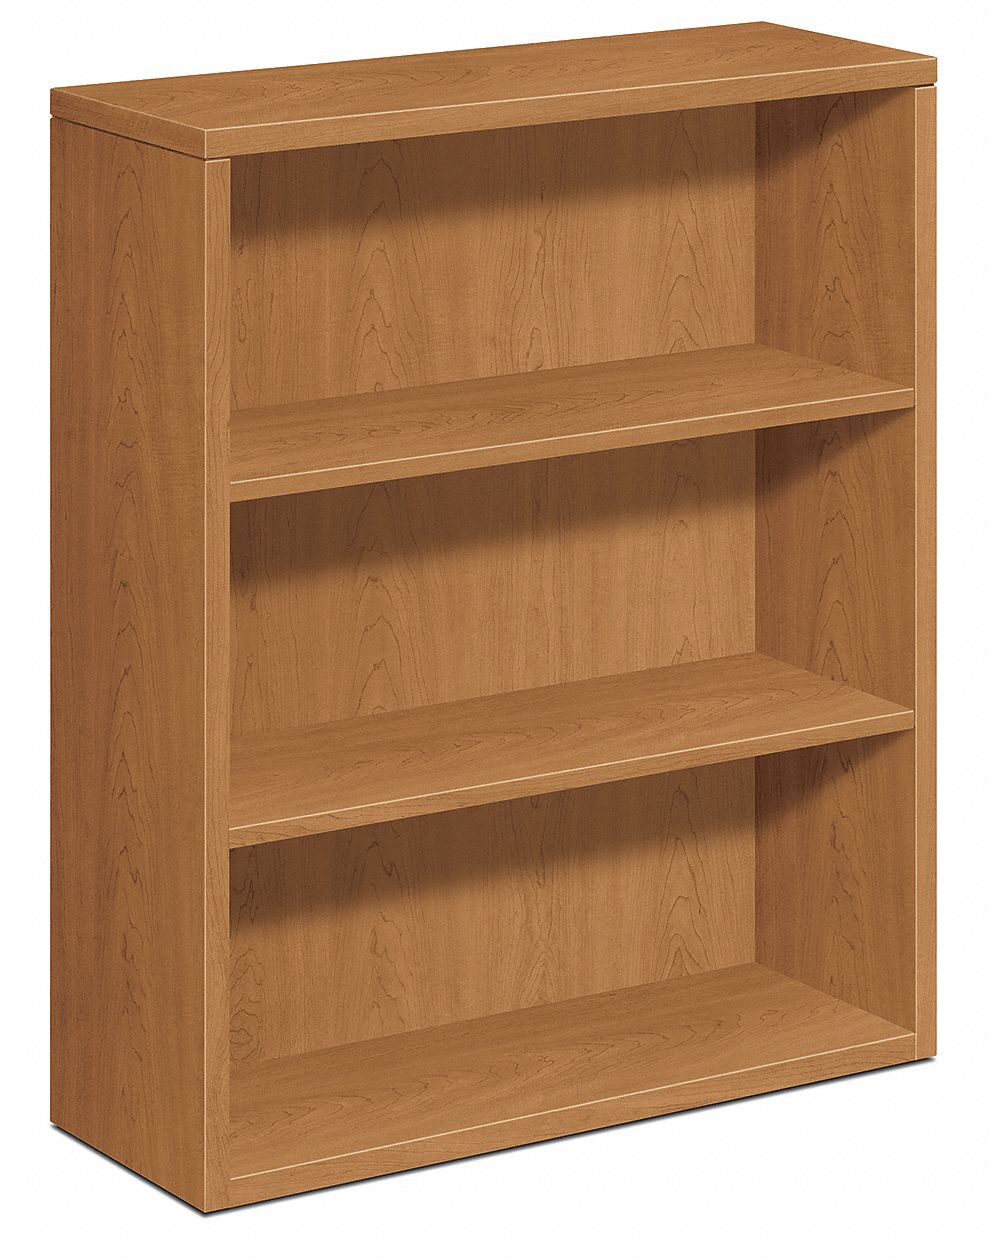 14K155 - Bookcase 3 Shelf Harvest